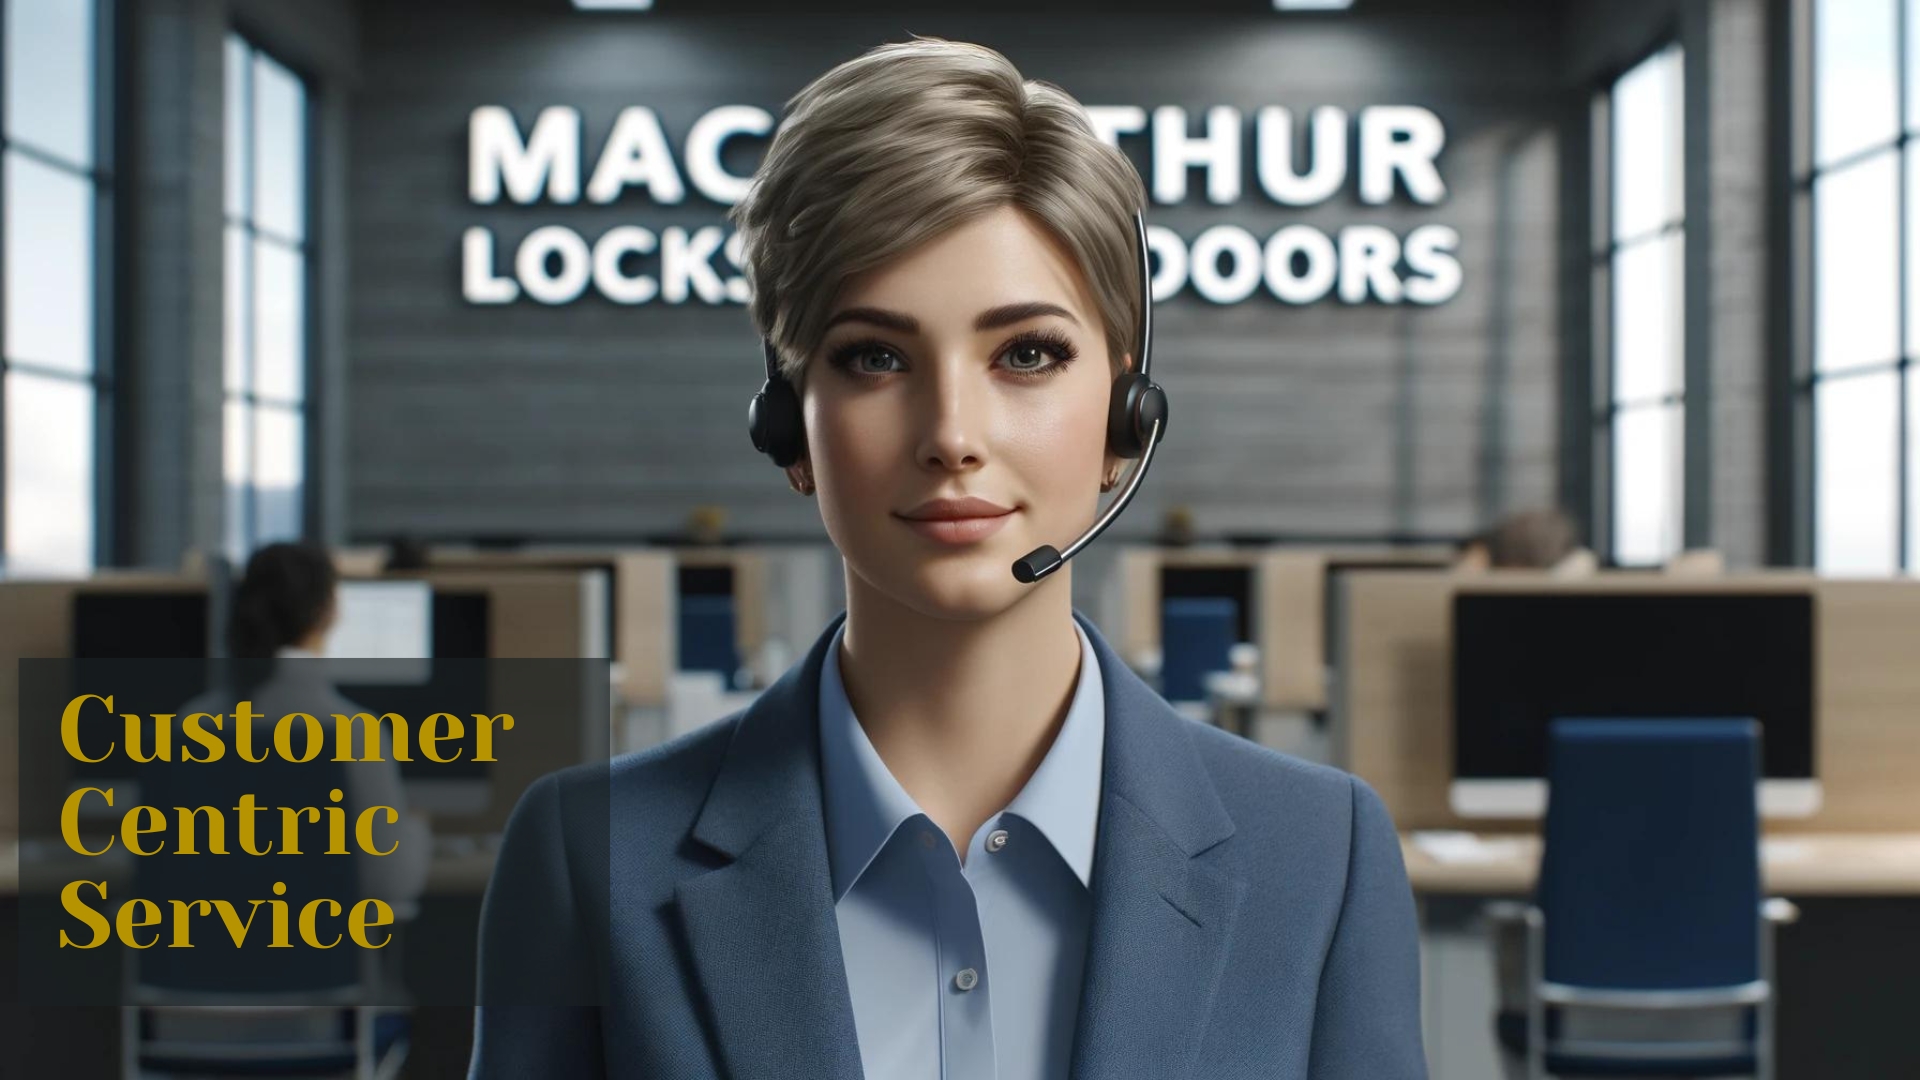 MacArthur Locks & Doors' customer service for car lockout service